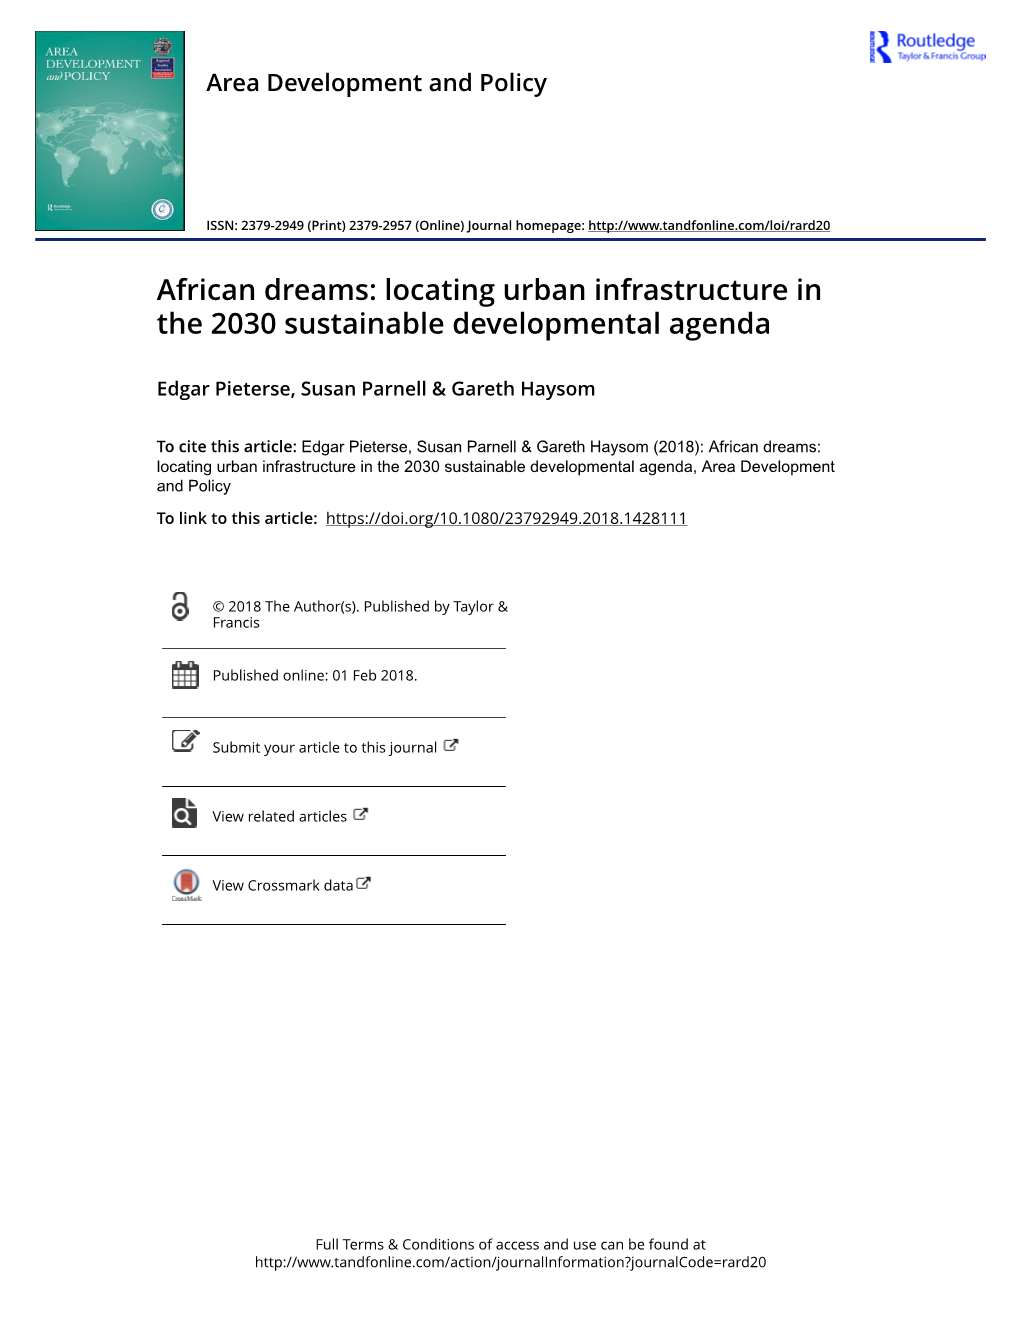 Locating Urban Infrastructure in the 2030 Sustainable Developmental Agenda